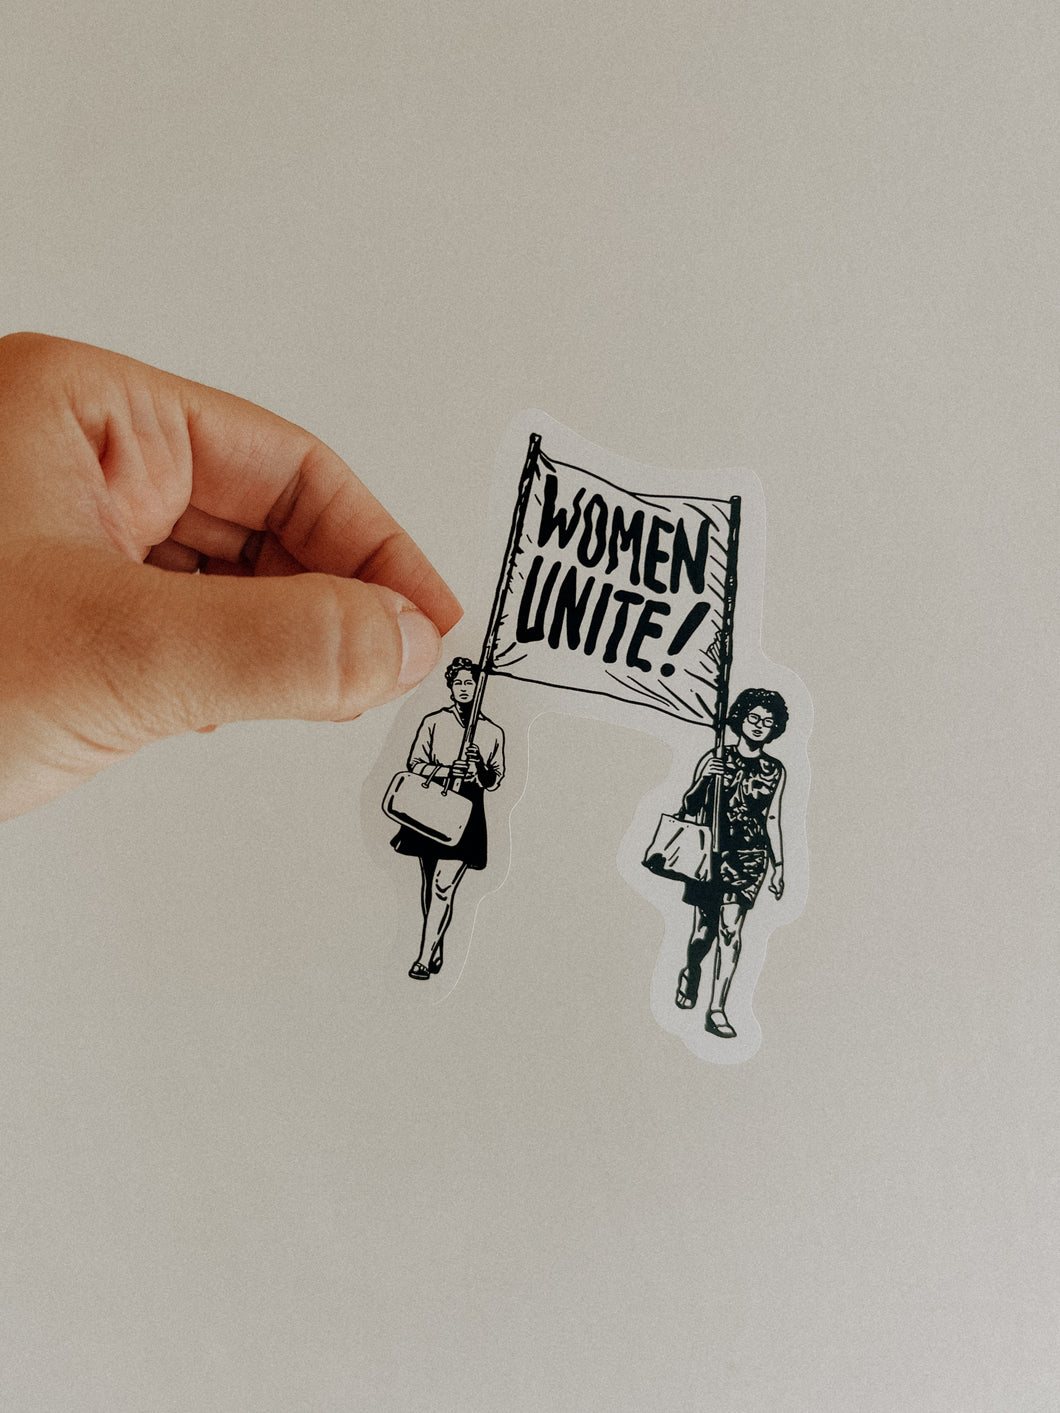 Women Unite Sticker